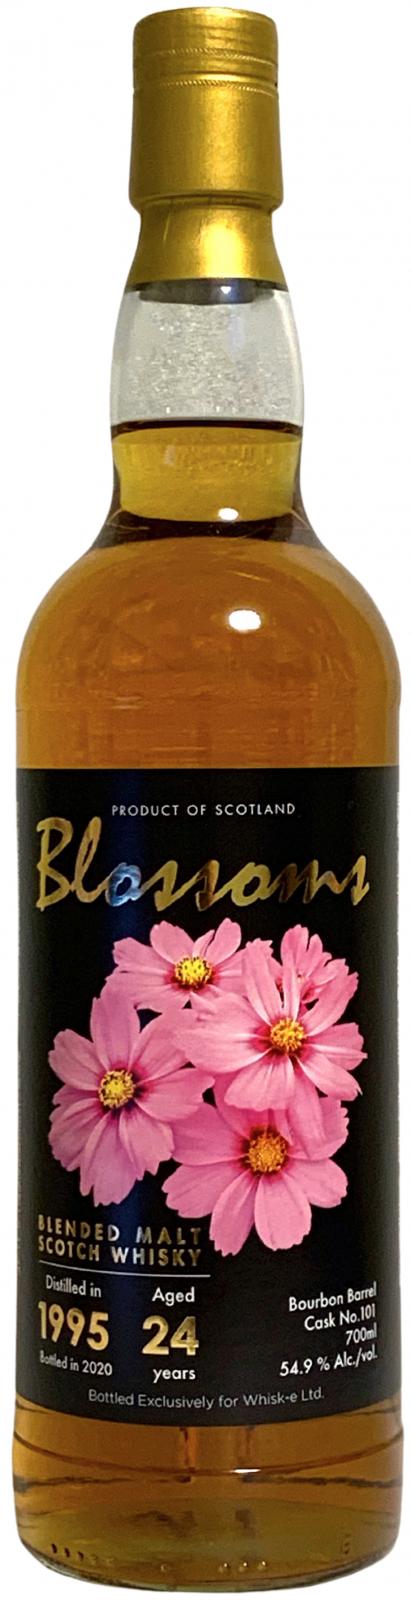 Blended Malt Scotch Whisky 1995 W-e Blossoms Bourbon Barrel #101 54.9% 700ml